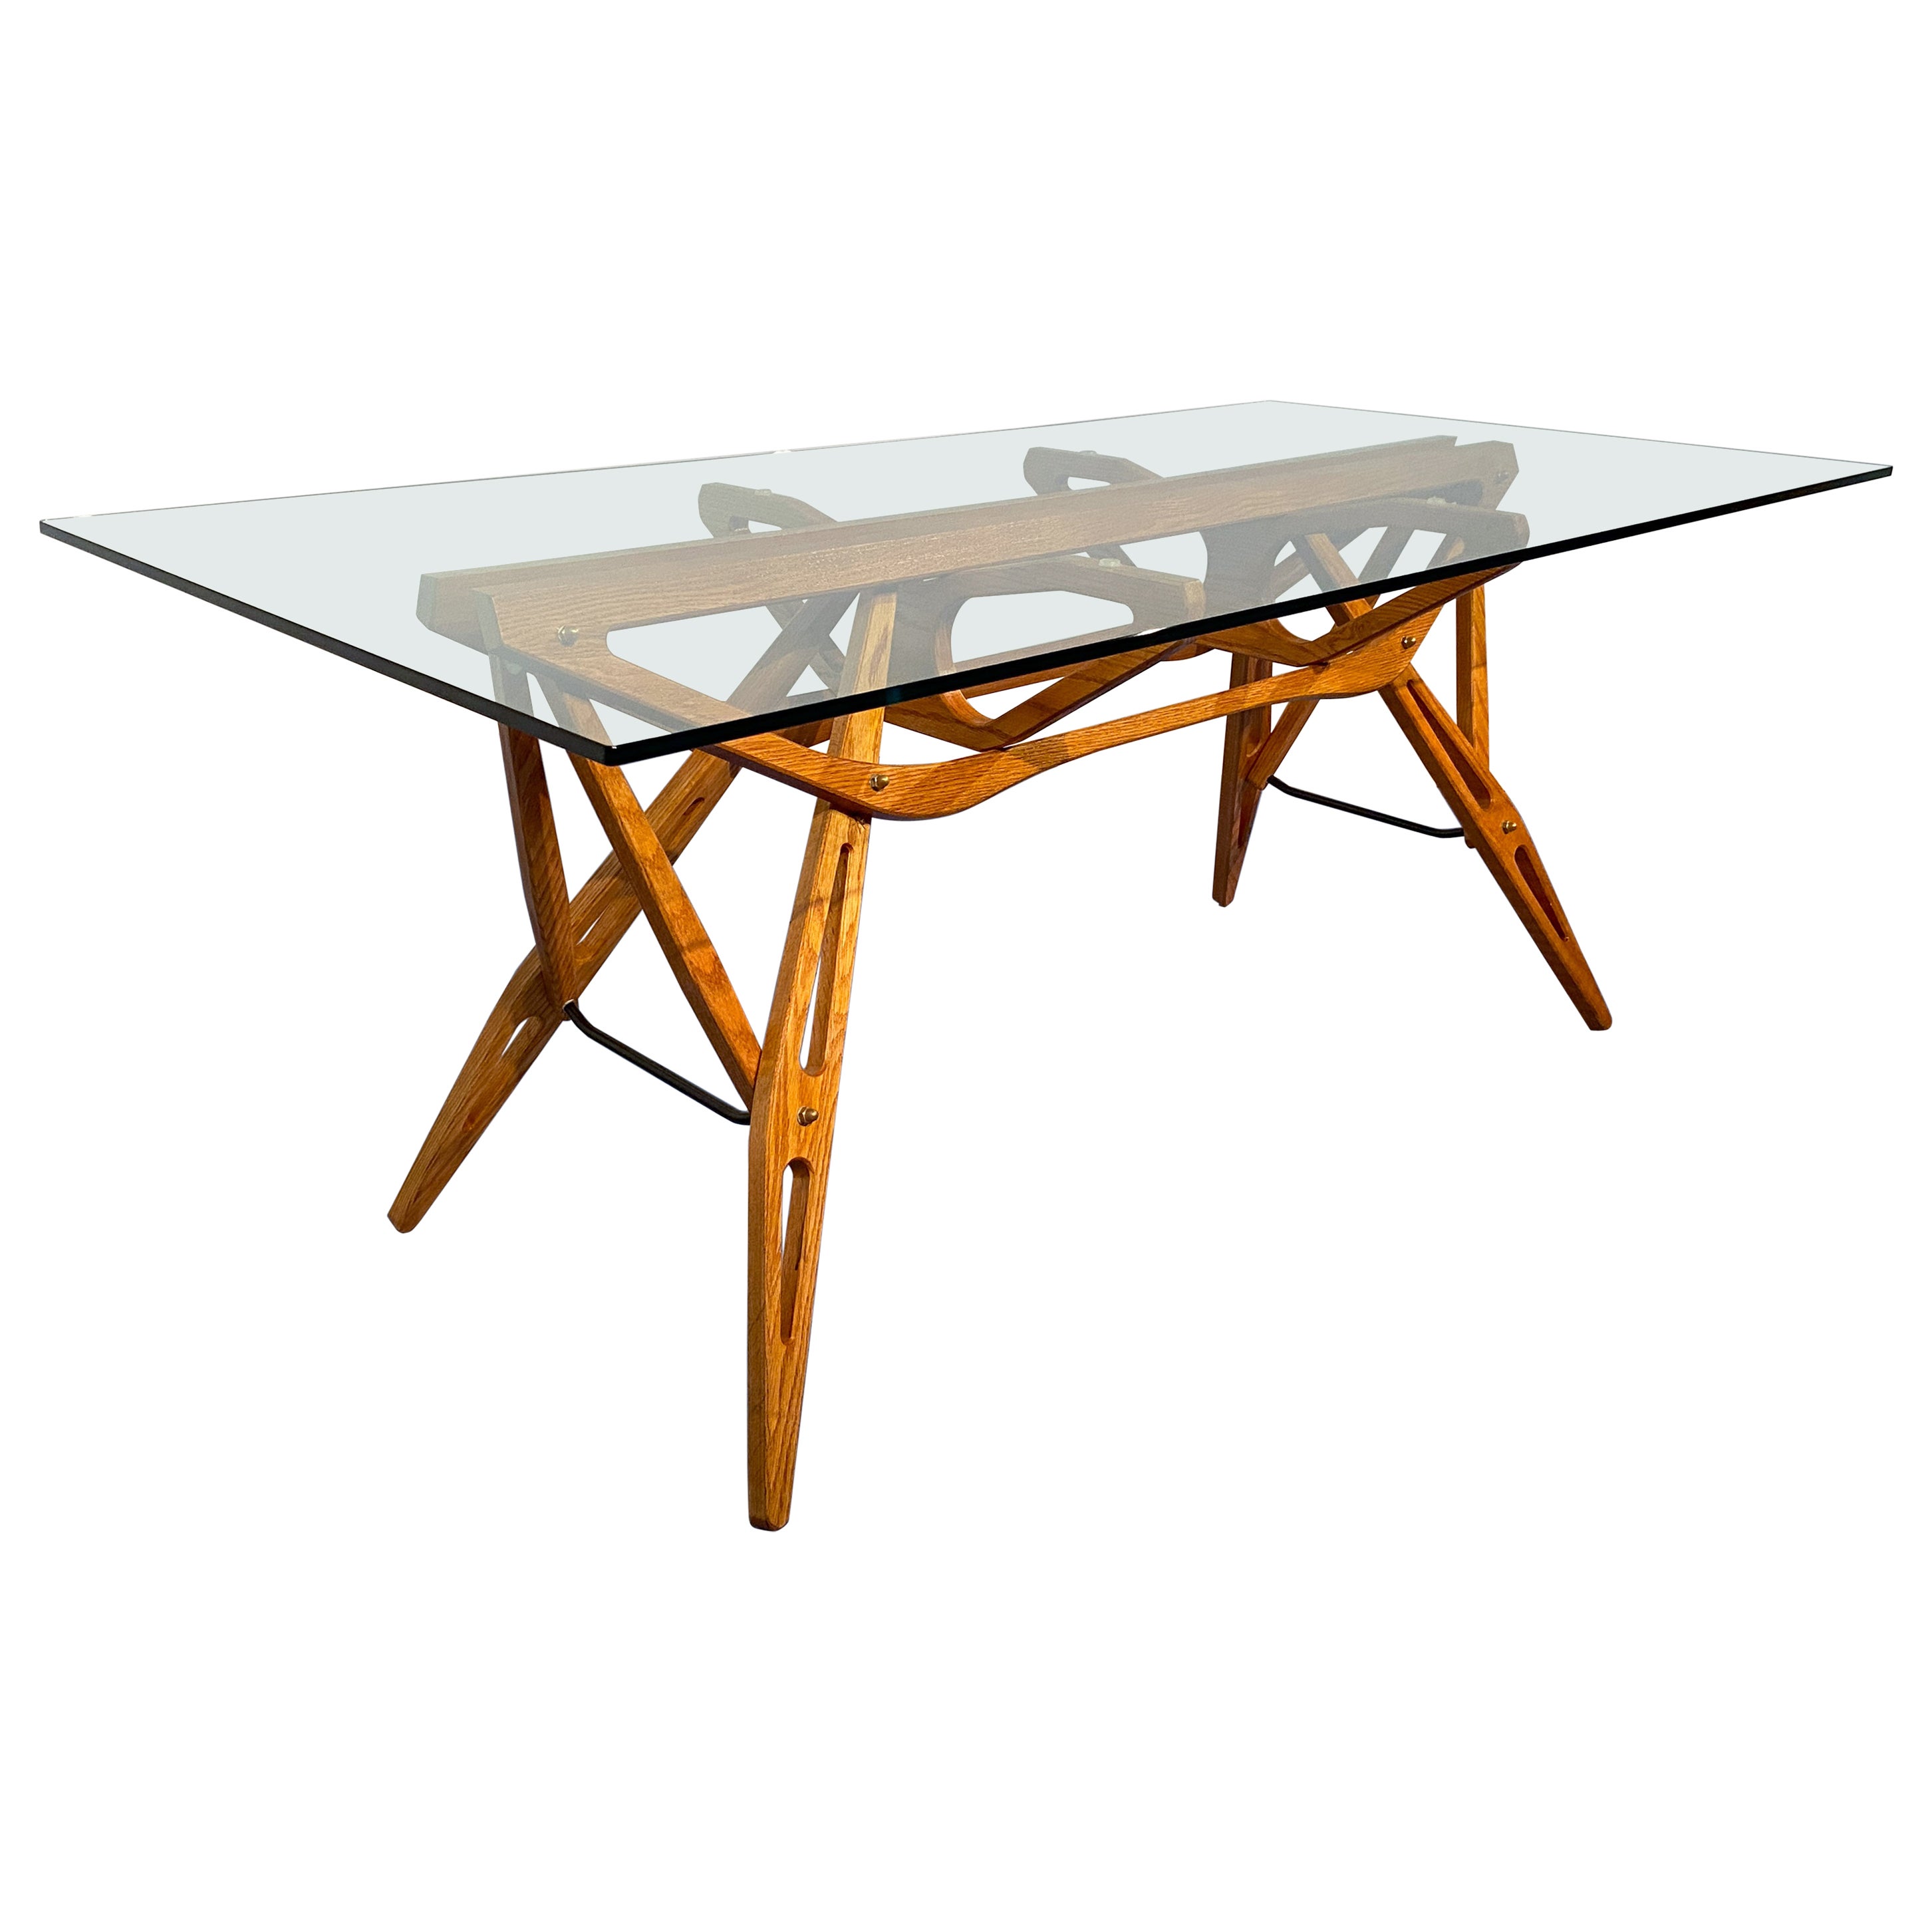 Italian "Reale Table" Designed by Carlo Mollino Produced by Zanotta, 1990